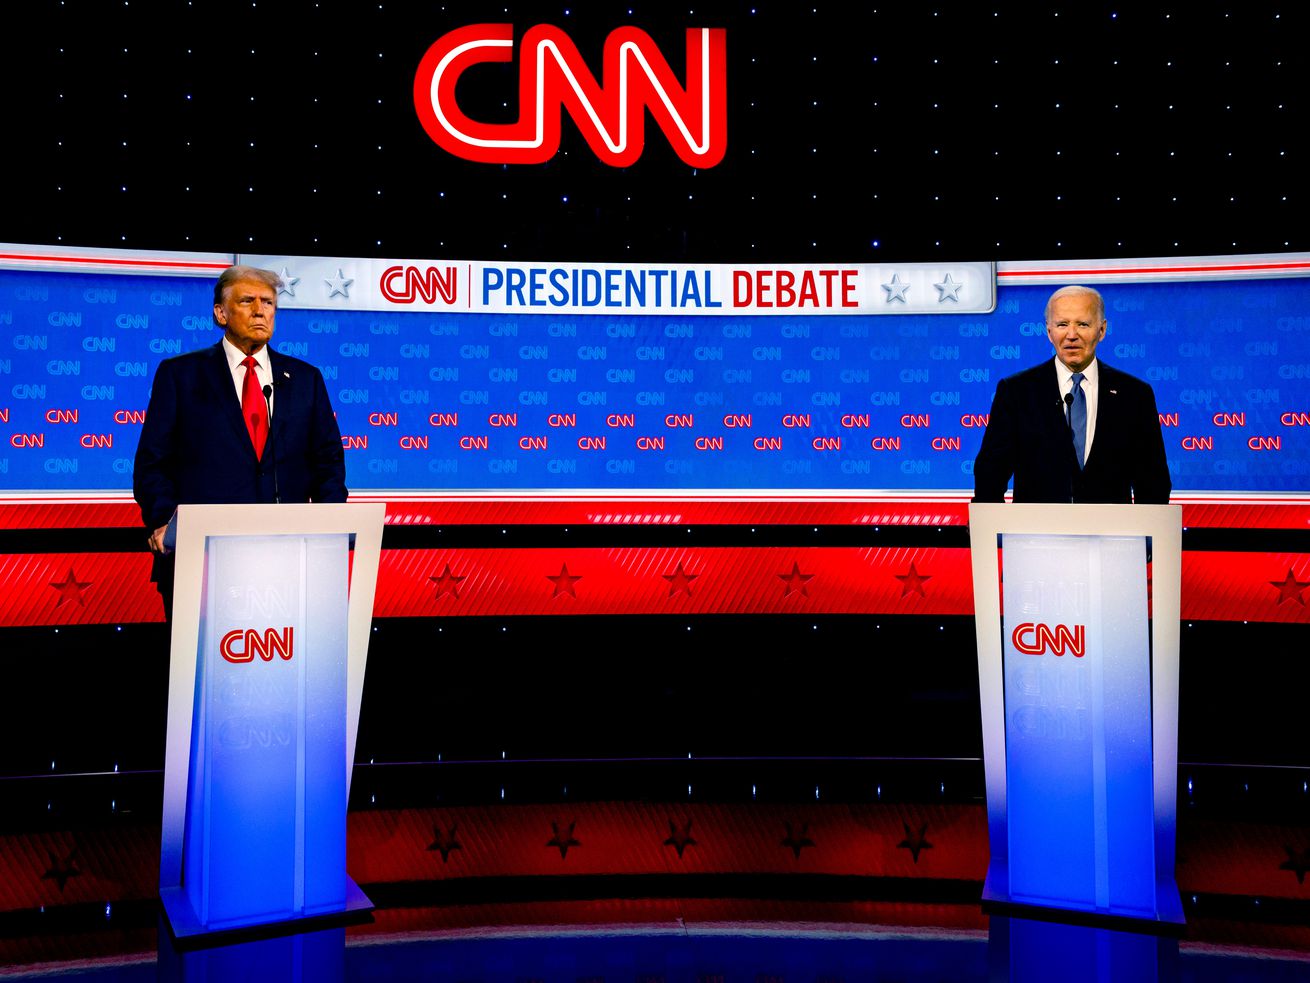 CNN Hosts First Presidential Debate